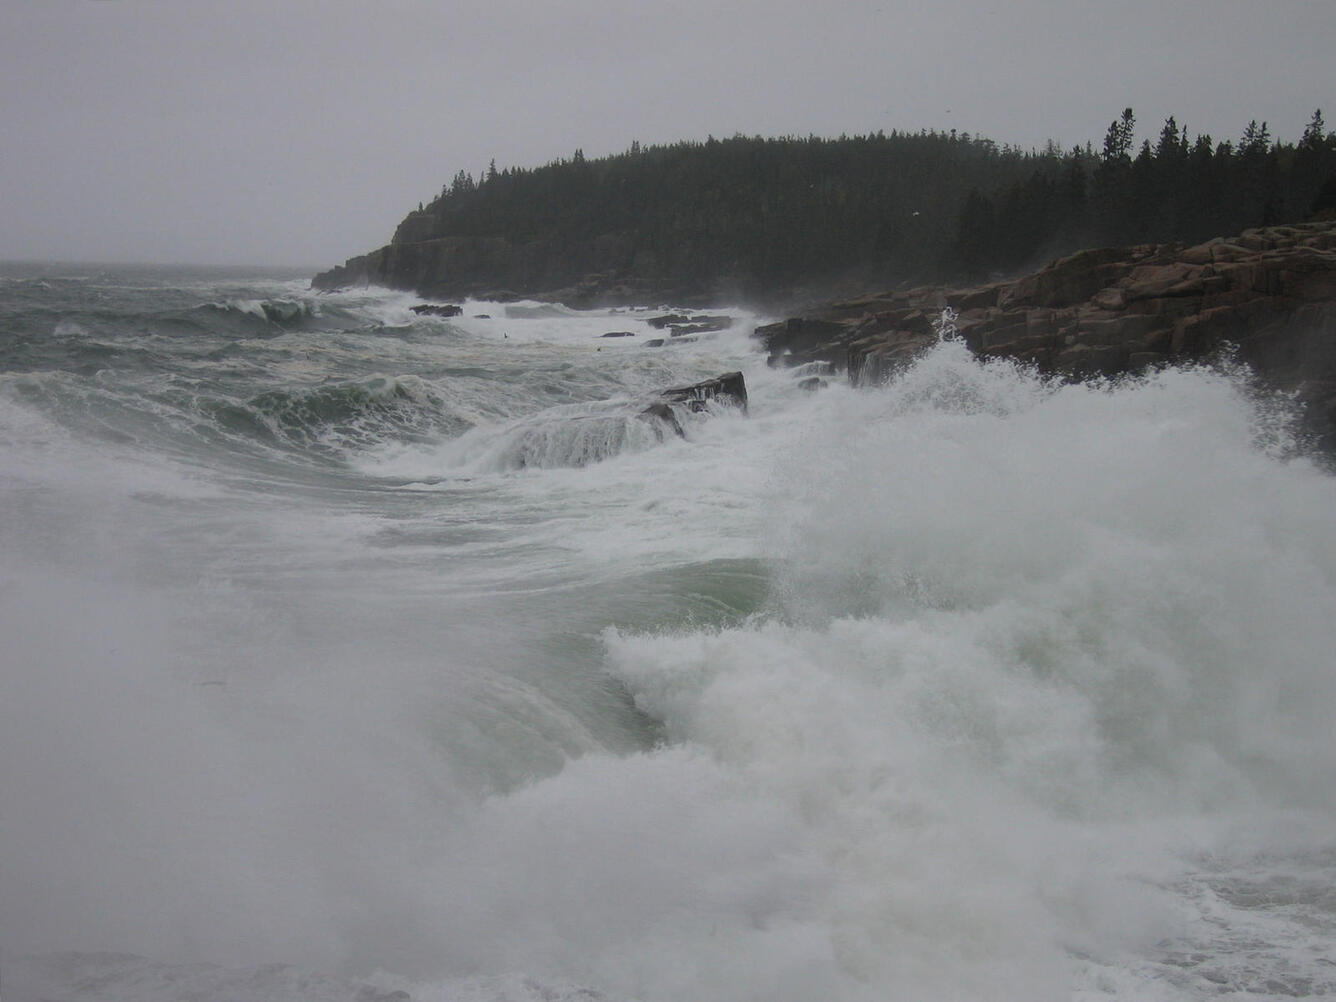 Rough seas batter the coastline during a storm.